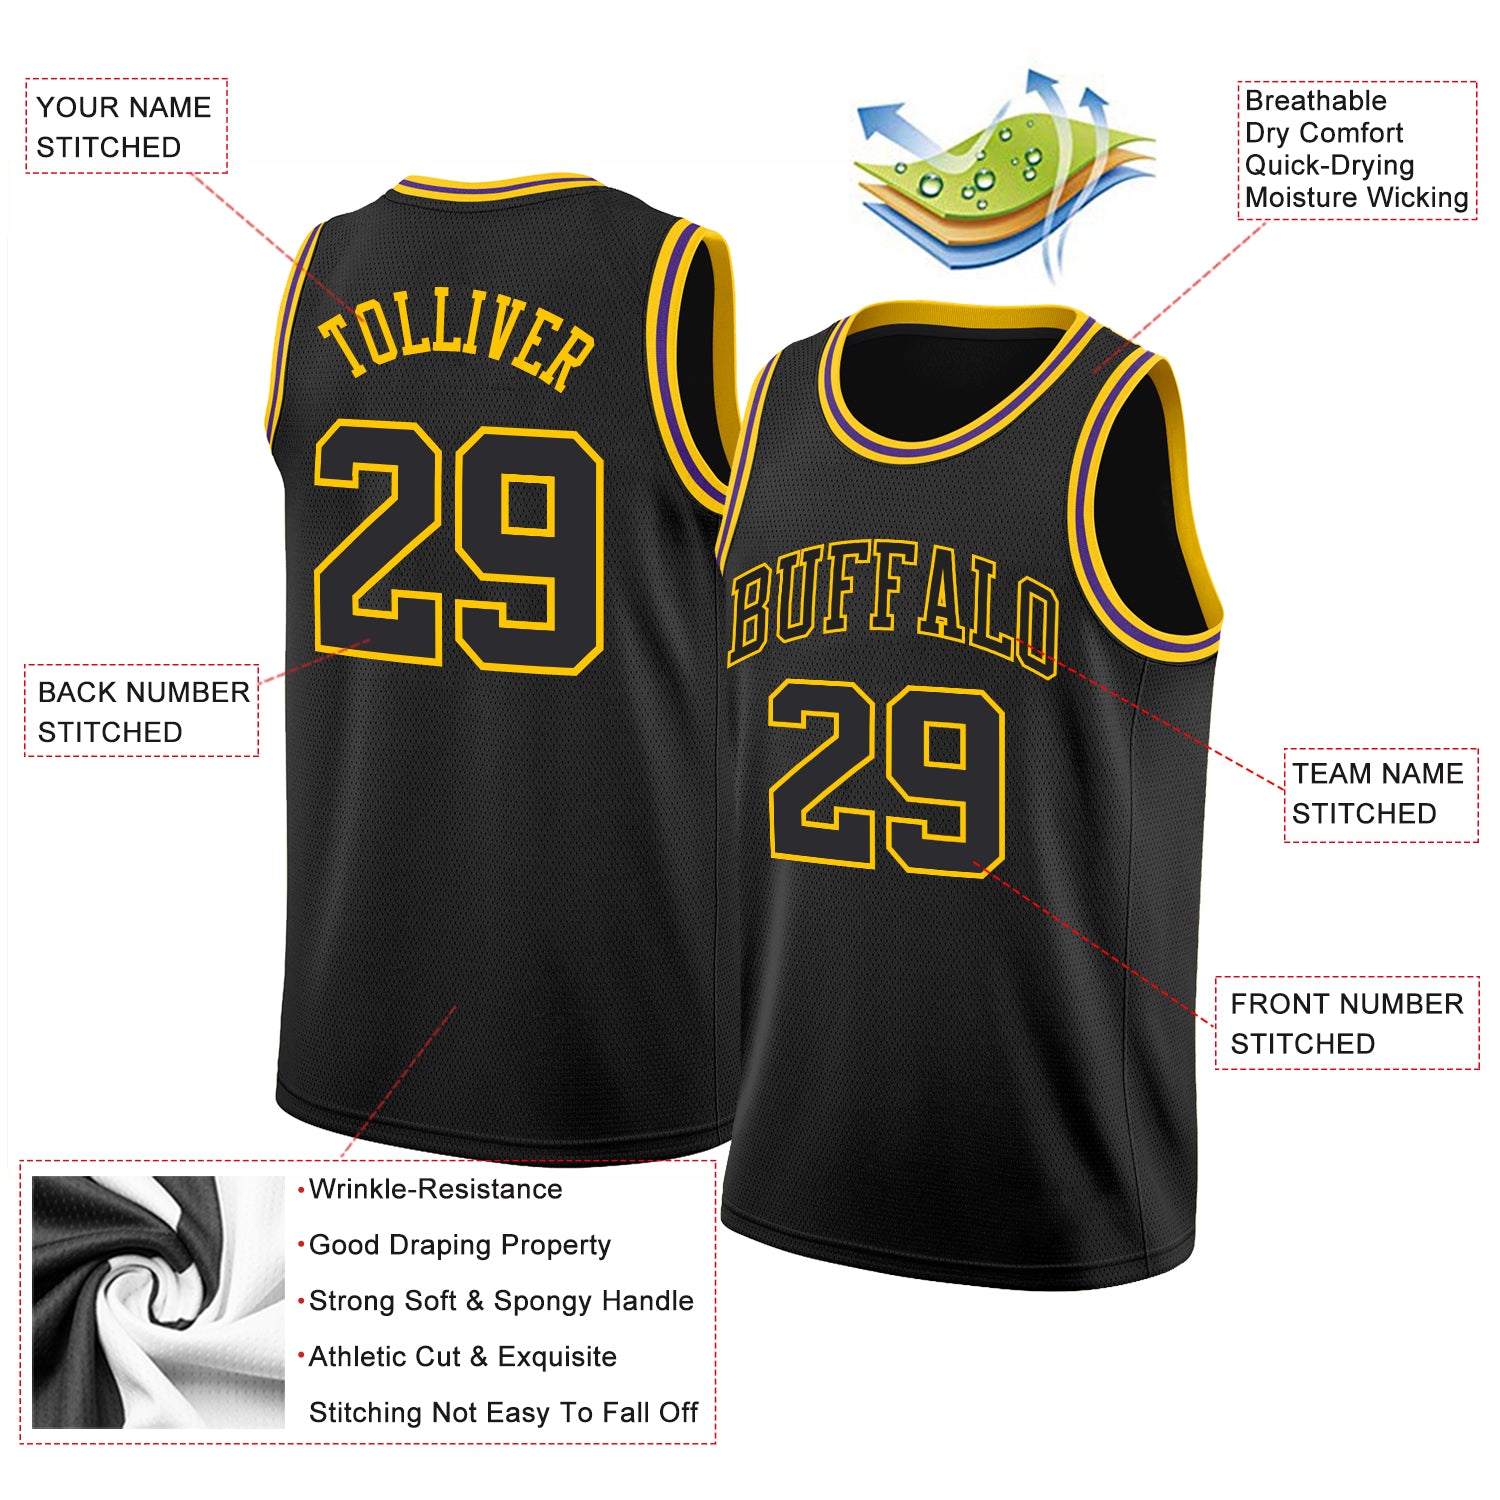 FANSIDEA Custom Maroon Black-Gold Authentic Throwback Basketball Jersey Men's Size:L